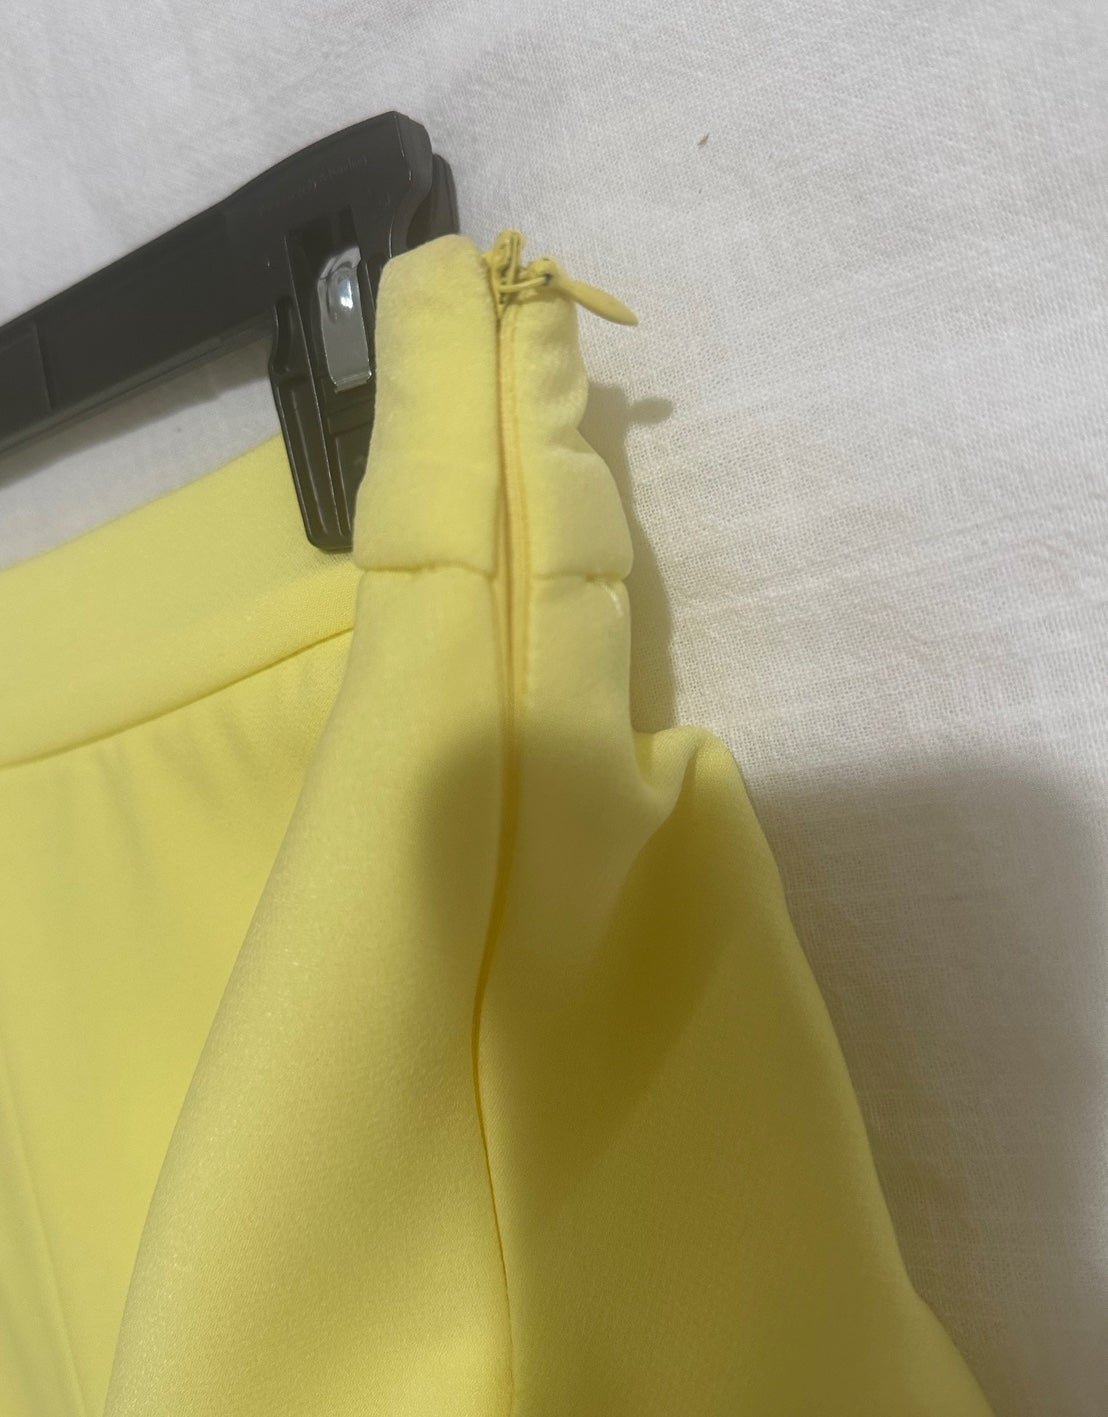 high discount Zara yellow ruffle shorts medium lAOHQNXfY Cool